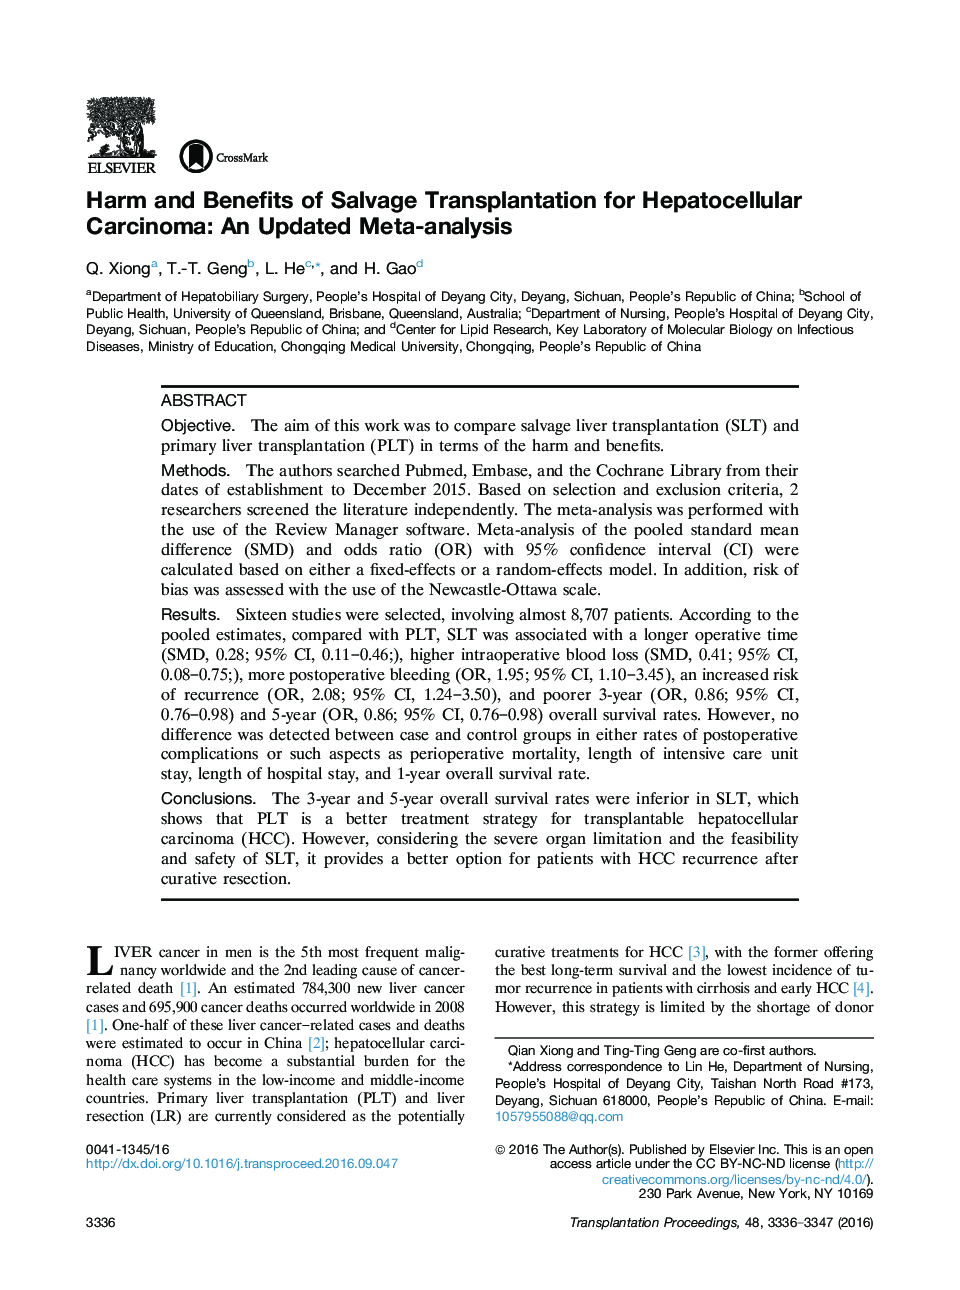 Recent Advances in TransplantationLiver transplantationHarm and Benefits of Salvage Transplantation for Hepatocellular Carcinoma: An Updated Meta-analysis